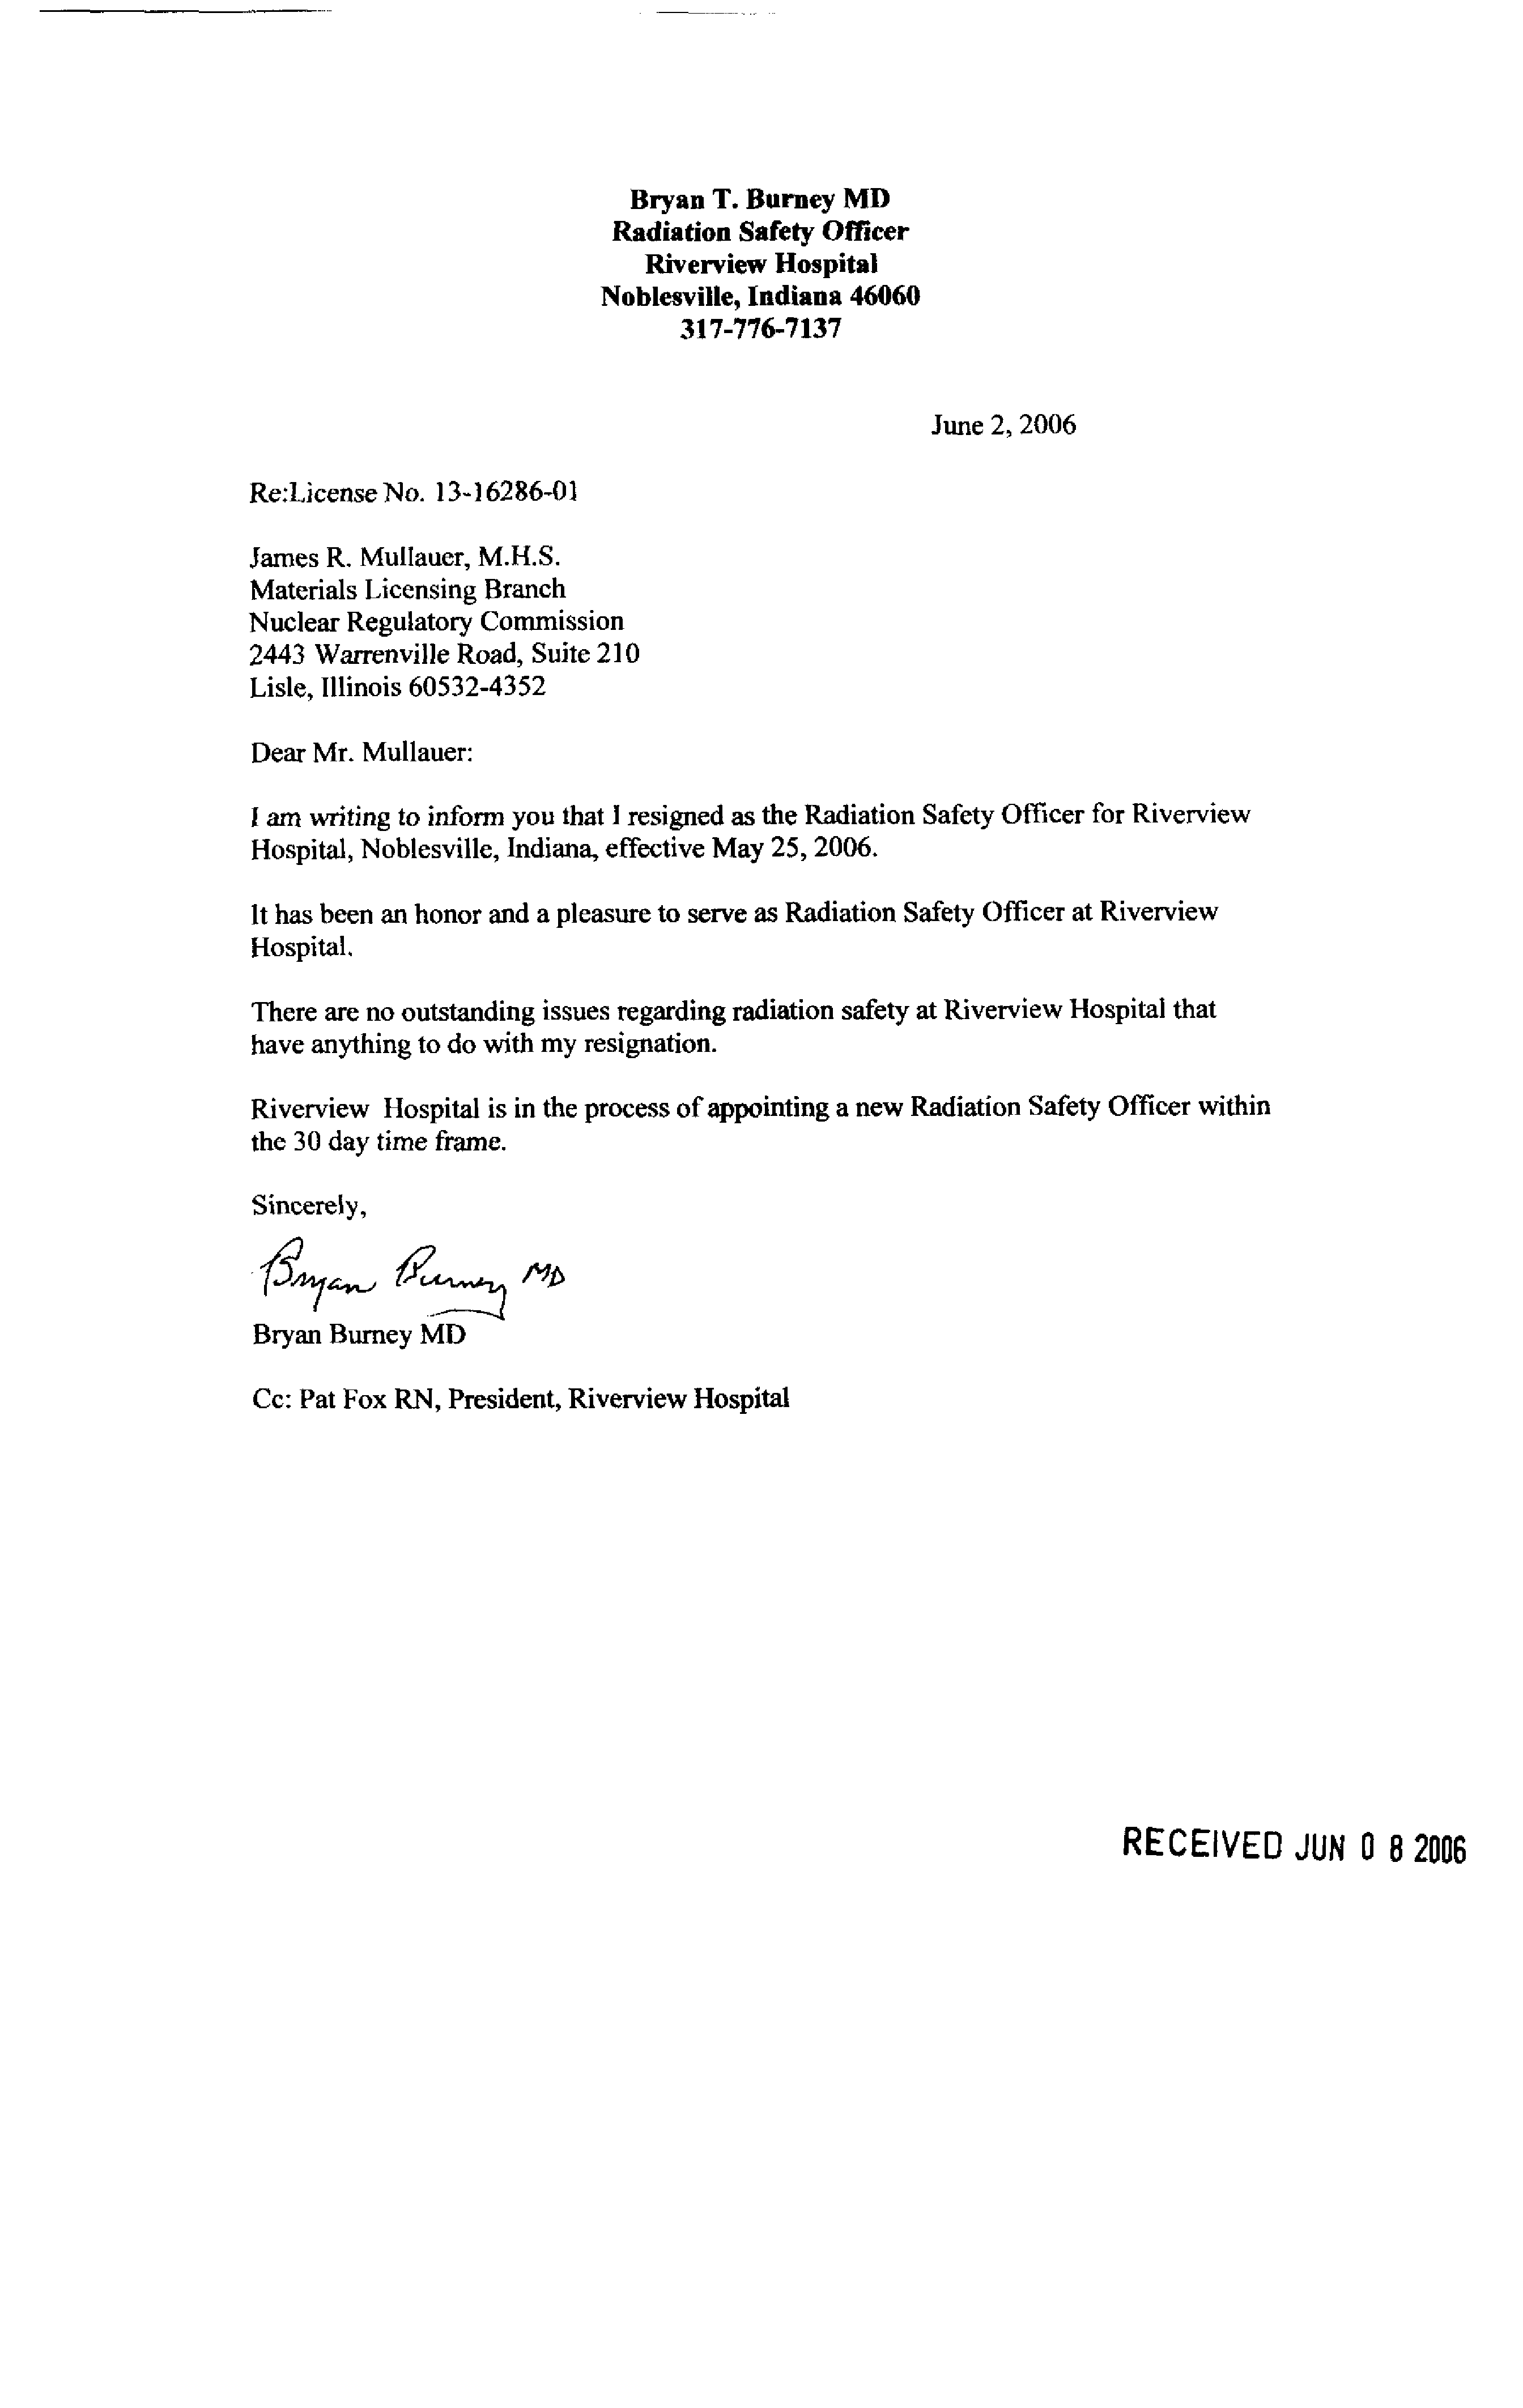 Radiation Safety Officer Email Resignation Letter 模板